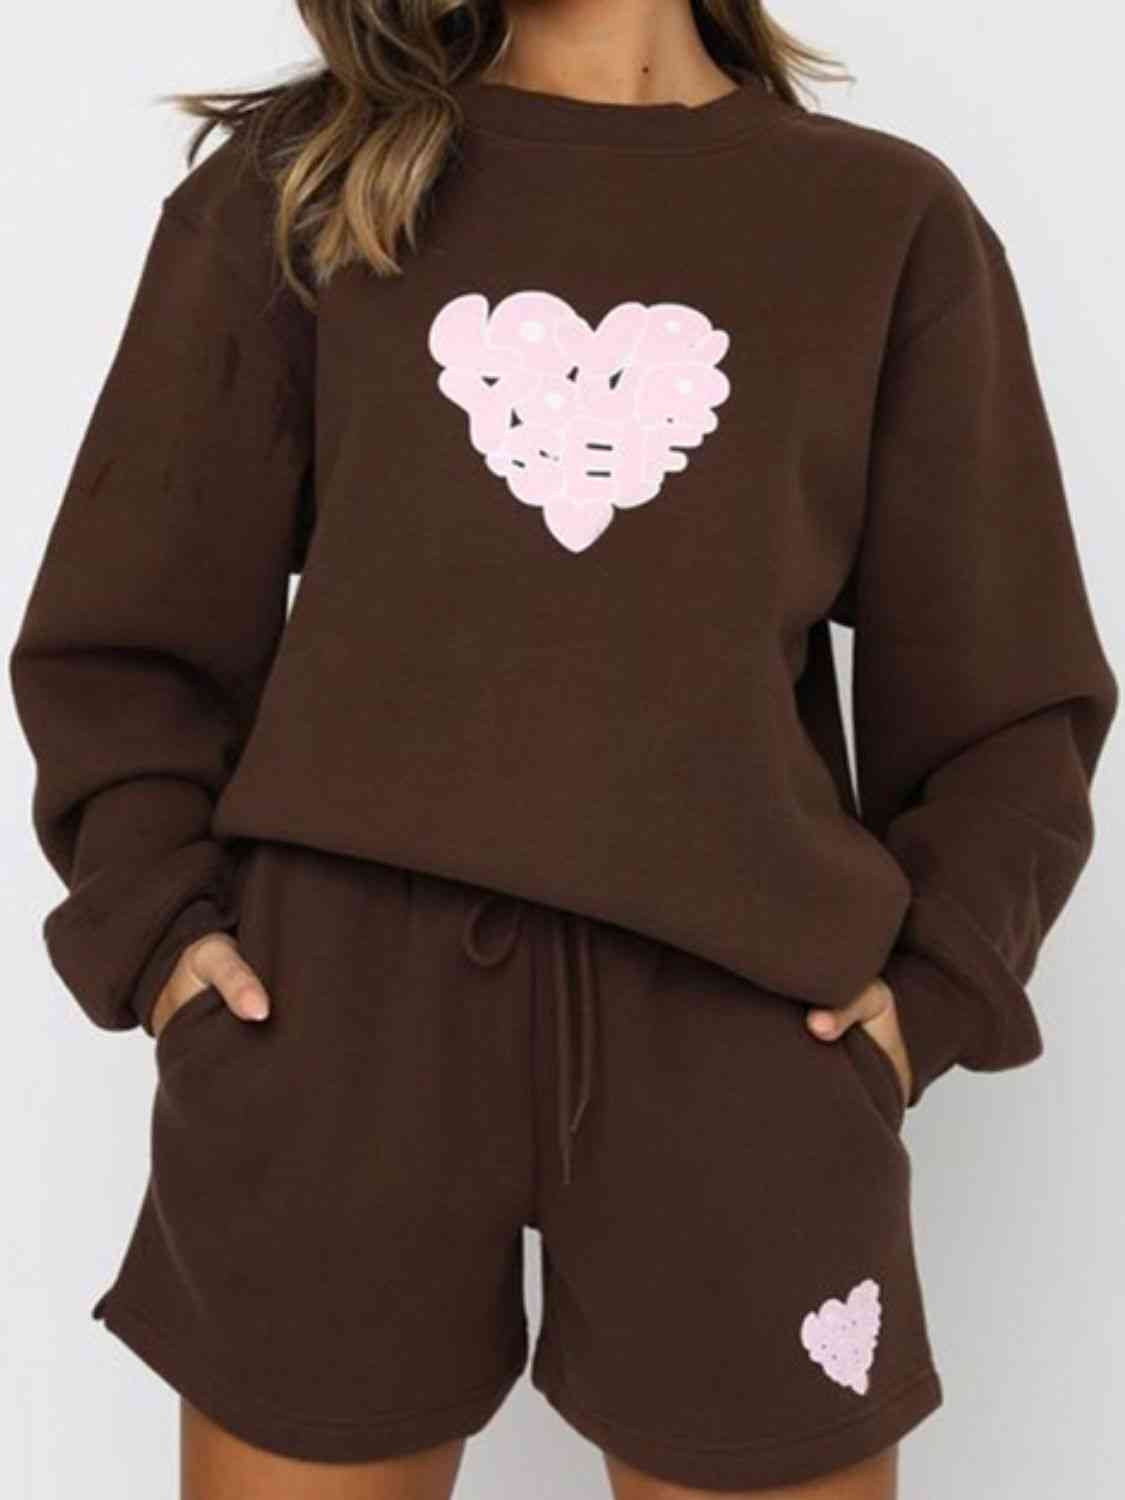 3 Love Daydream Sweatshirt w/ Shorts Outfit